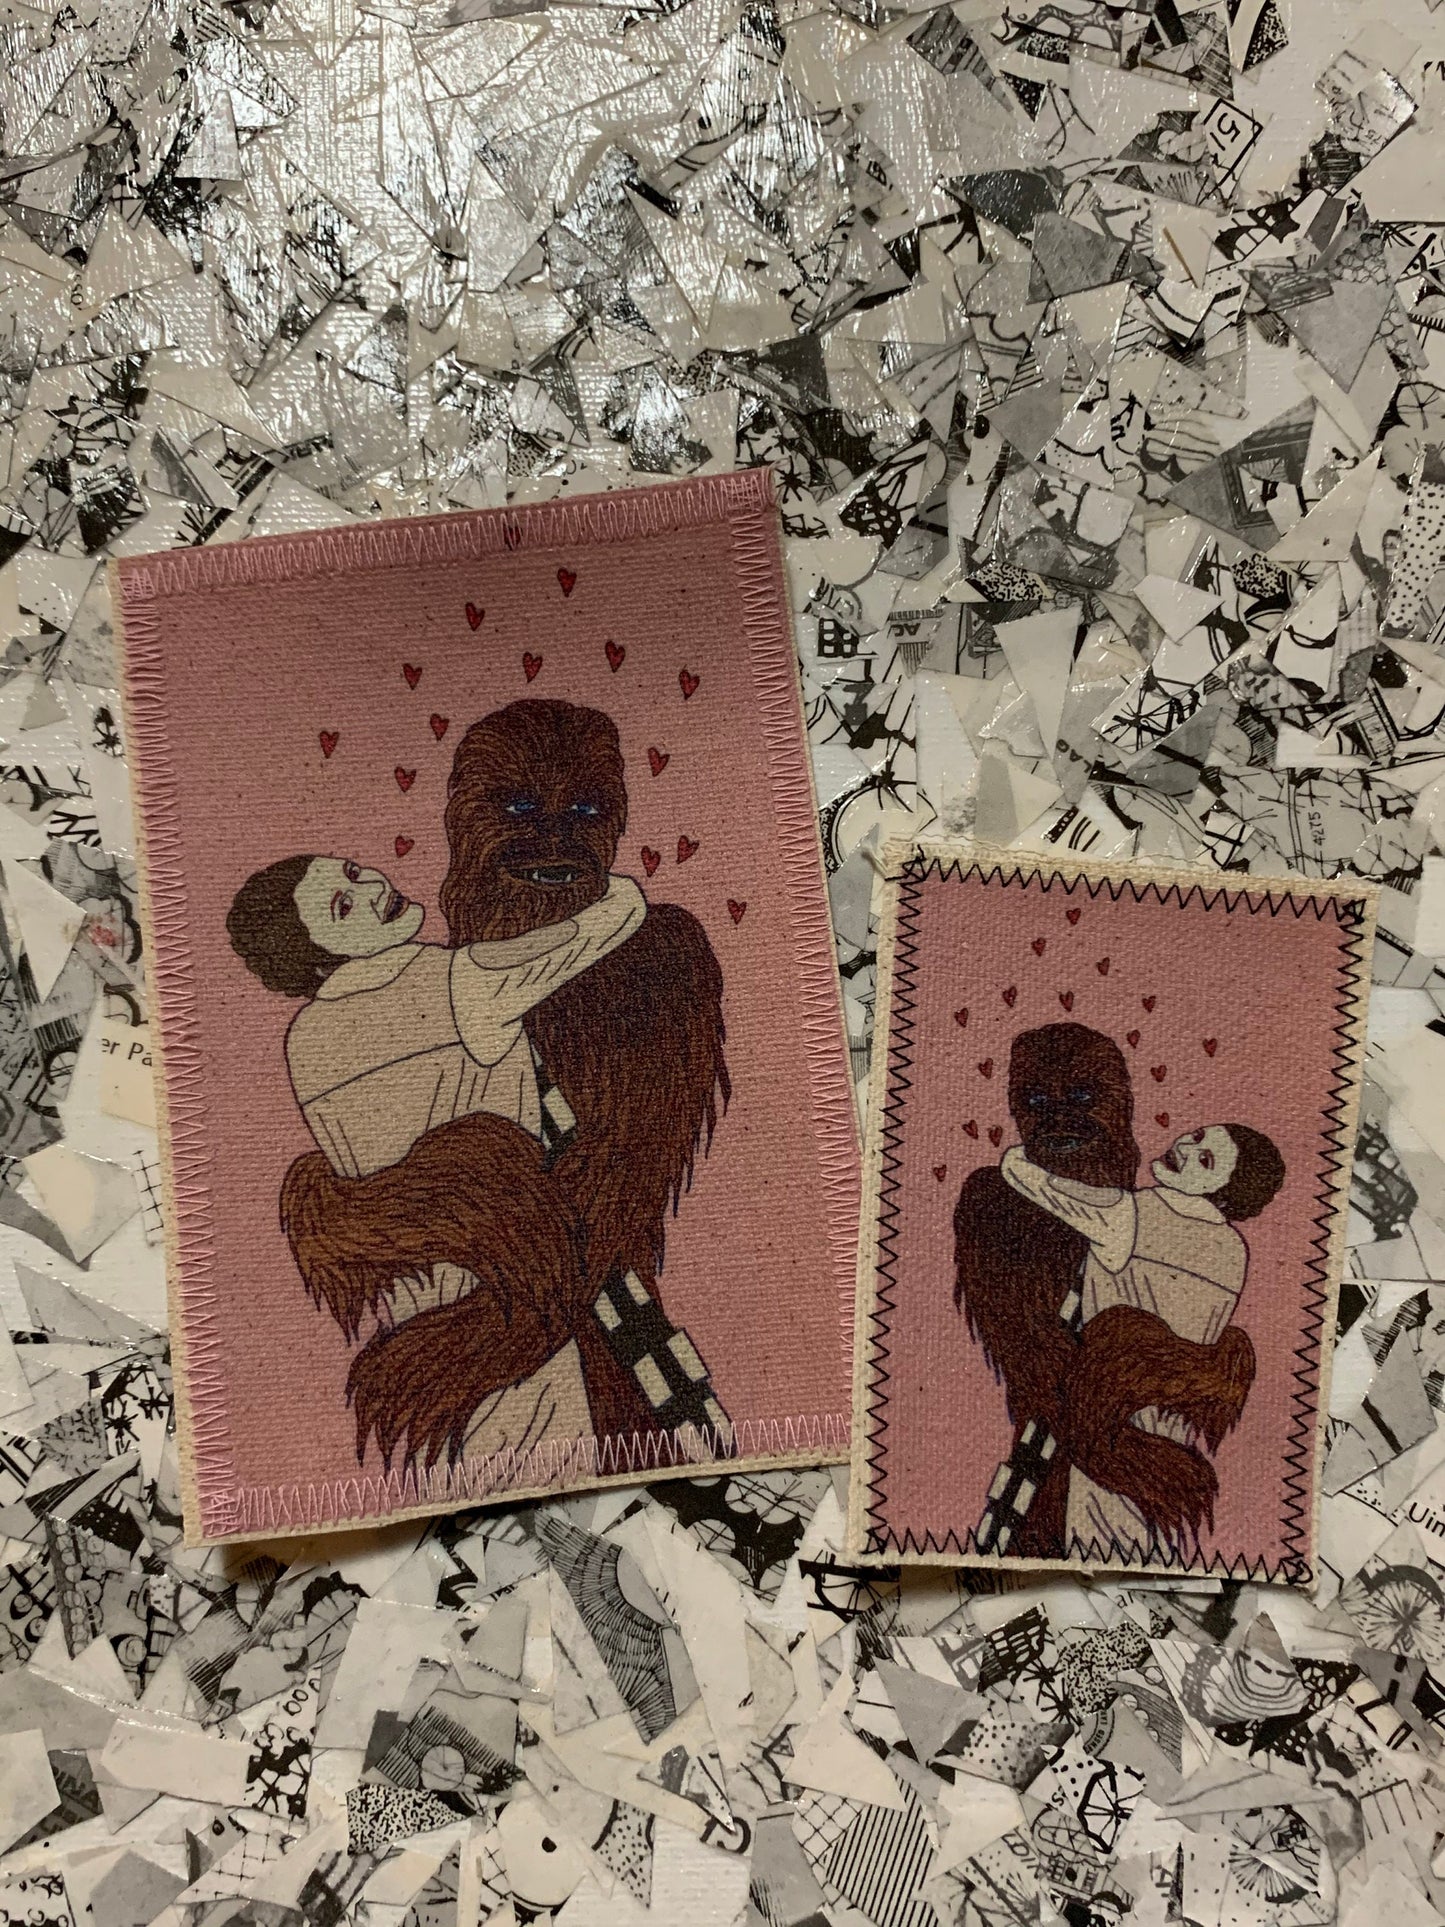 Leia & Chewbacca patch